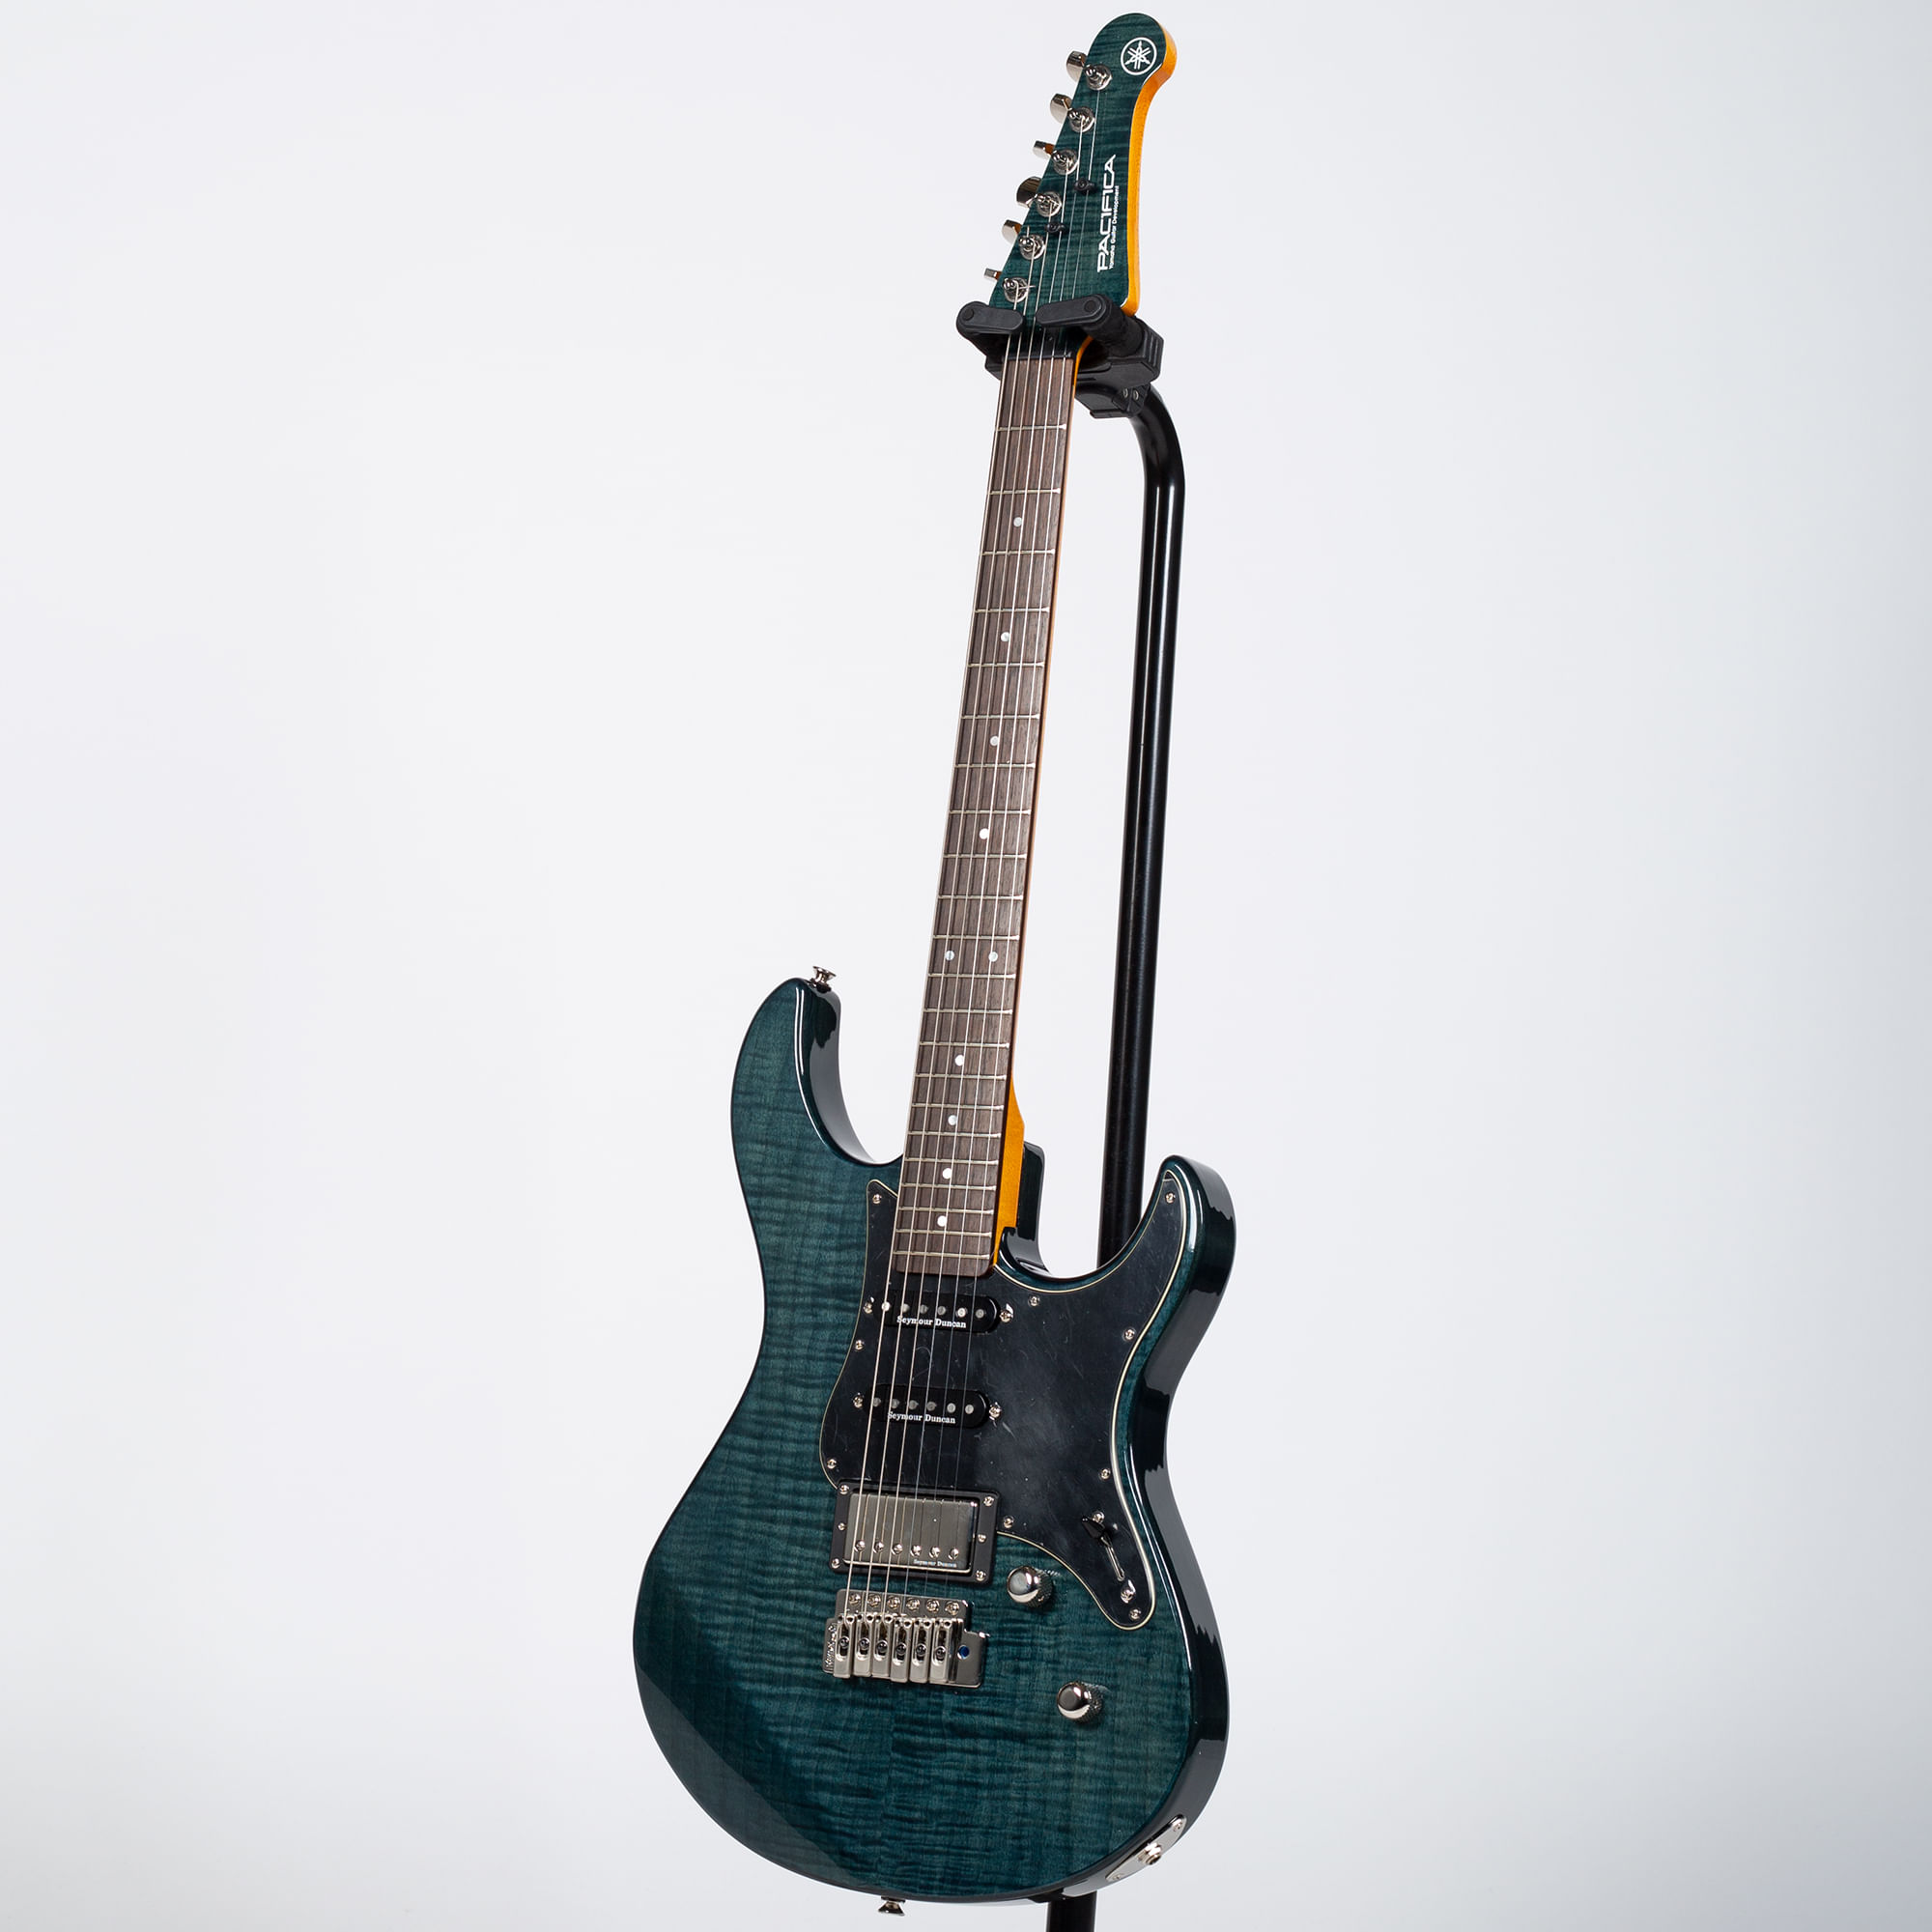 Yamaha PAC612VIIFM Pacifica Electric Guitar - Indigo Blue